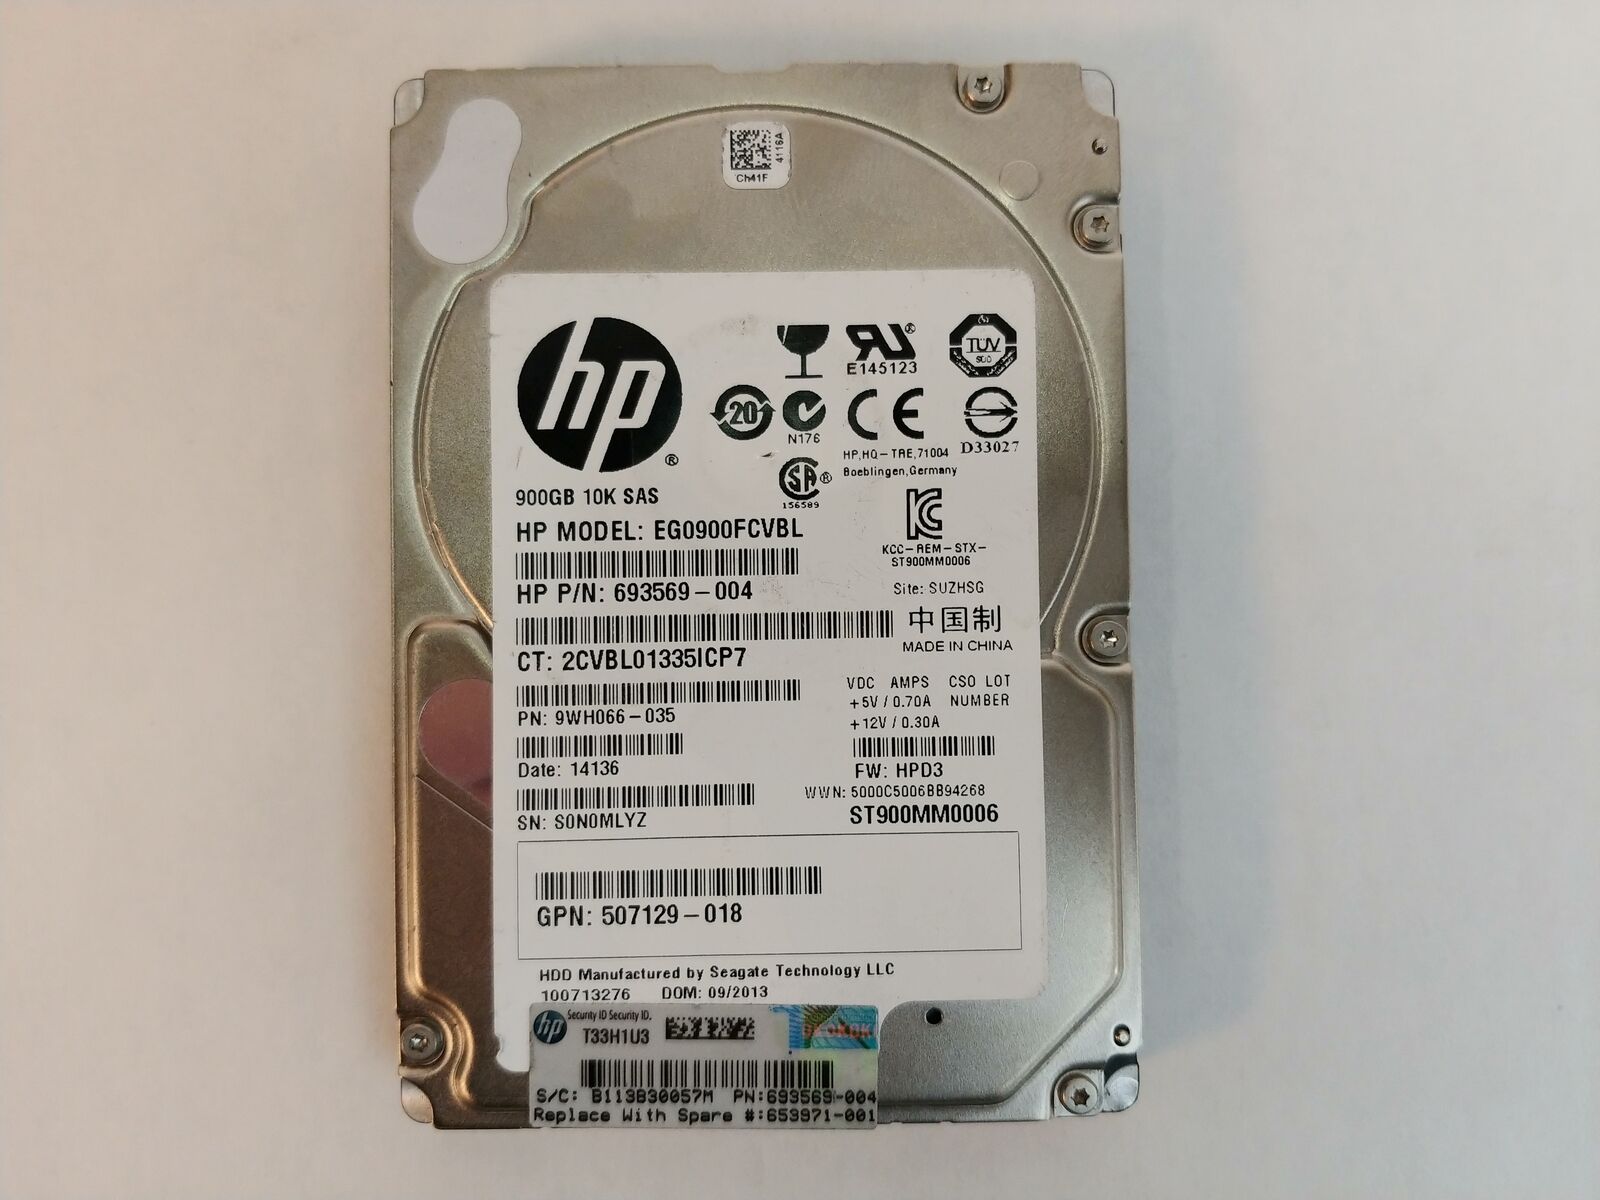 Seagate HP ST900MM0006 900 GB SAS 2 2.5 in Enterprise Hard Drive